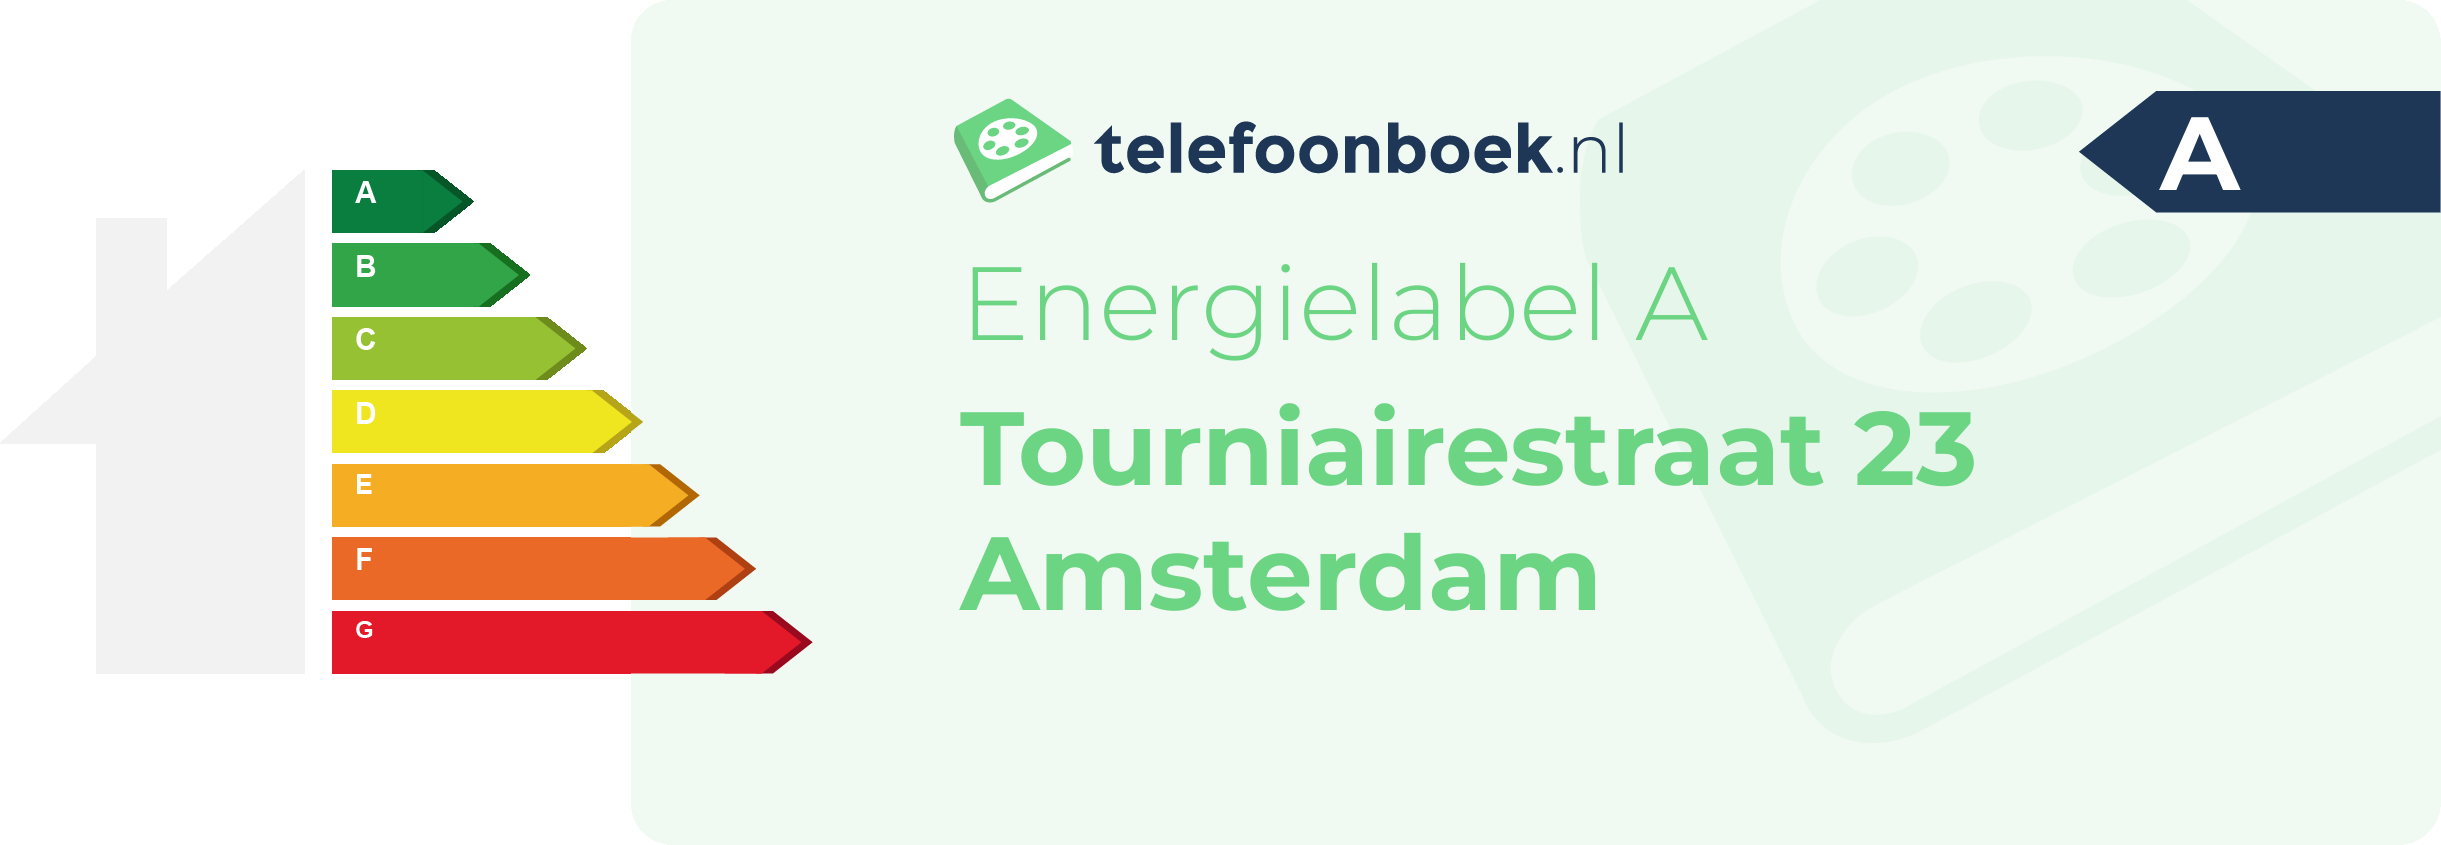 Energielabel Tourniairestraat 23 Amsterdam